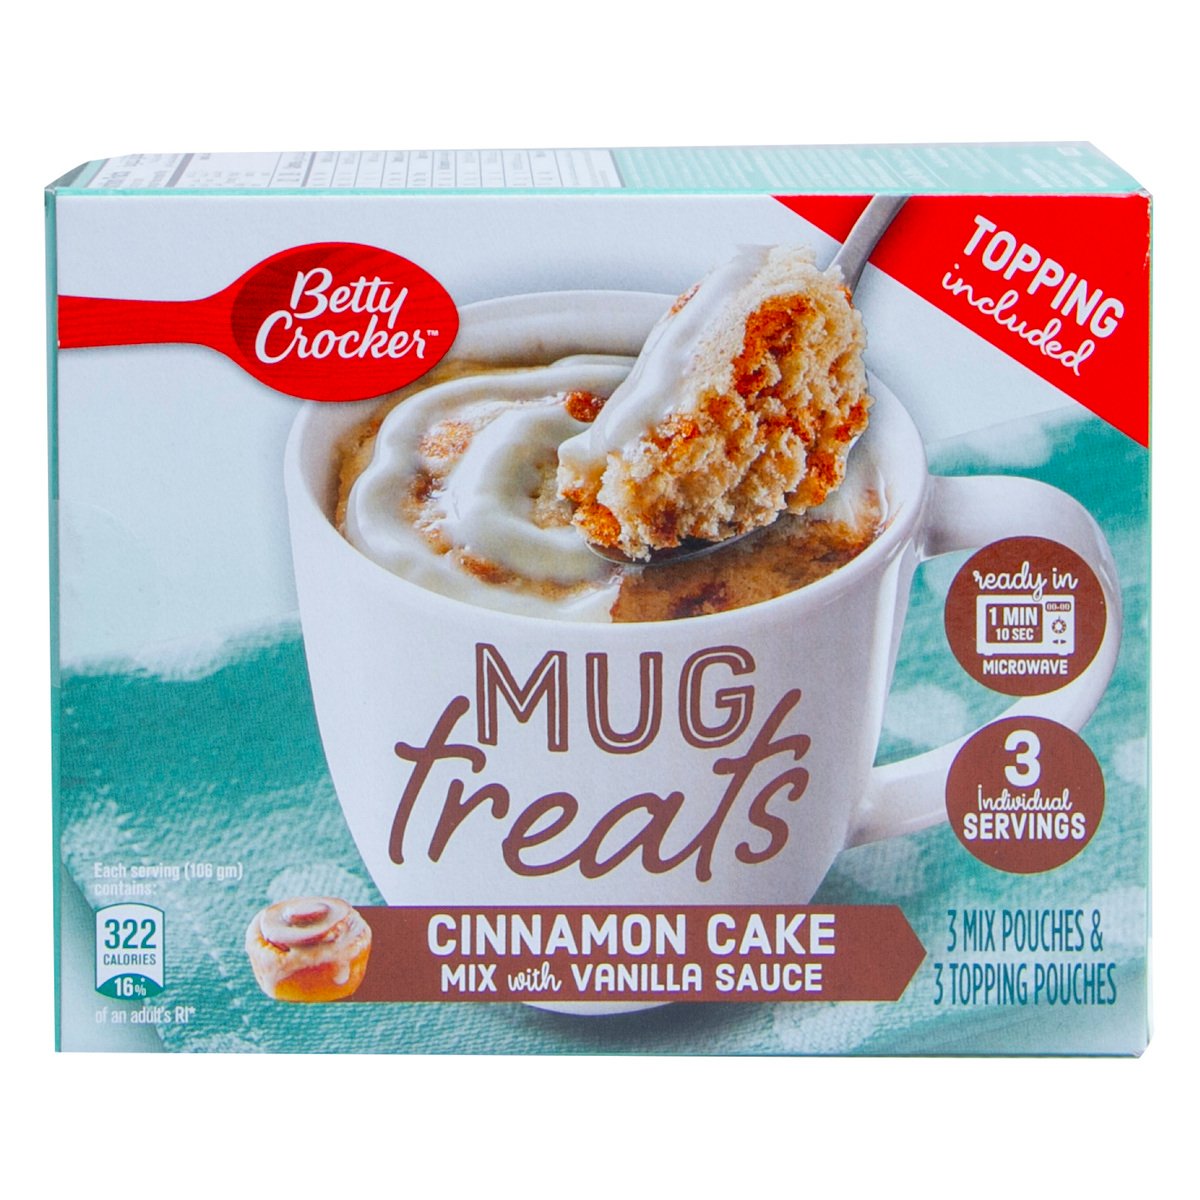 Betty Crocker Mug Treats Cinnamon Cake Mix With Vanilla Sauce 204g